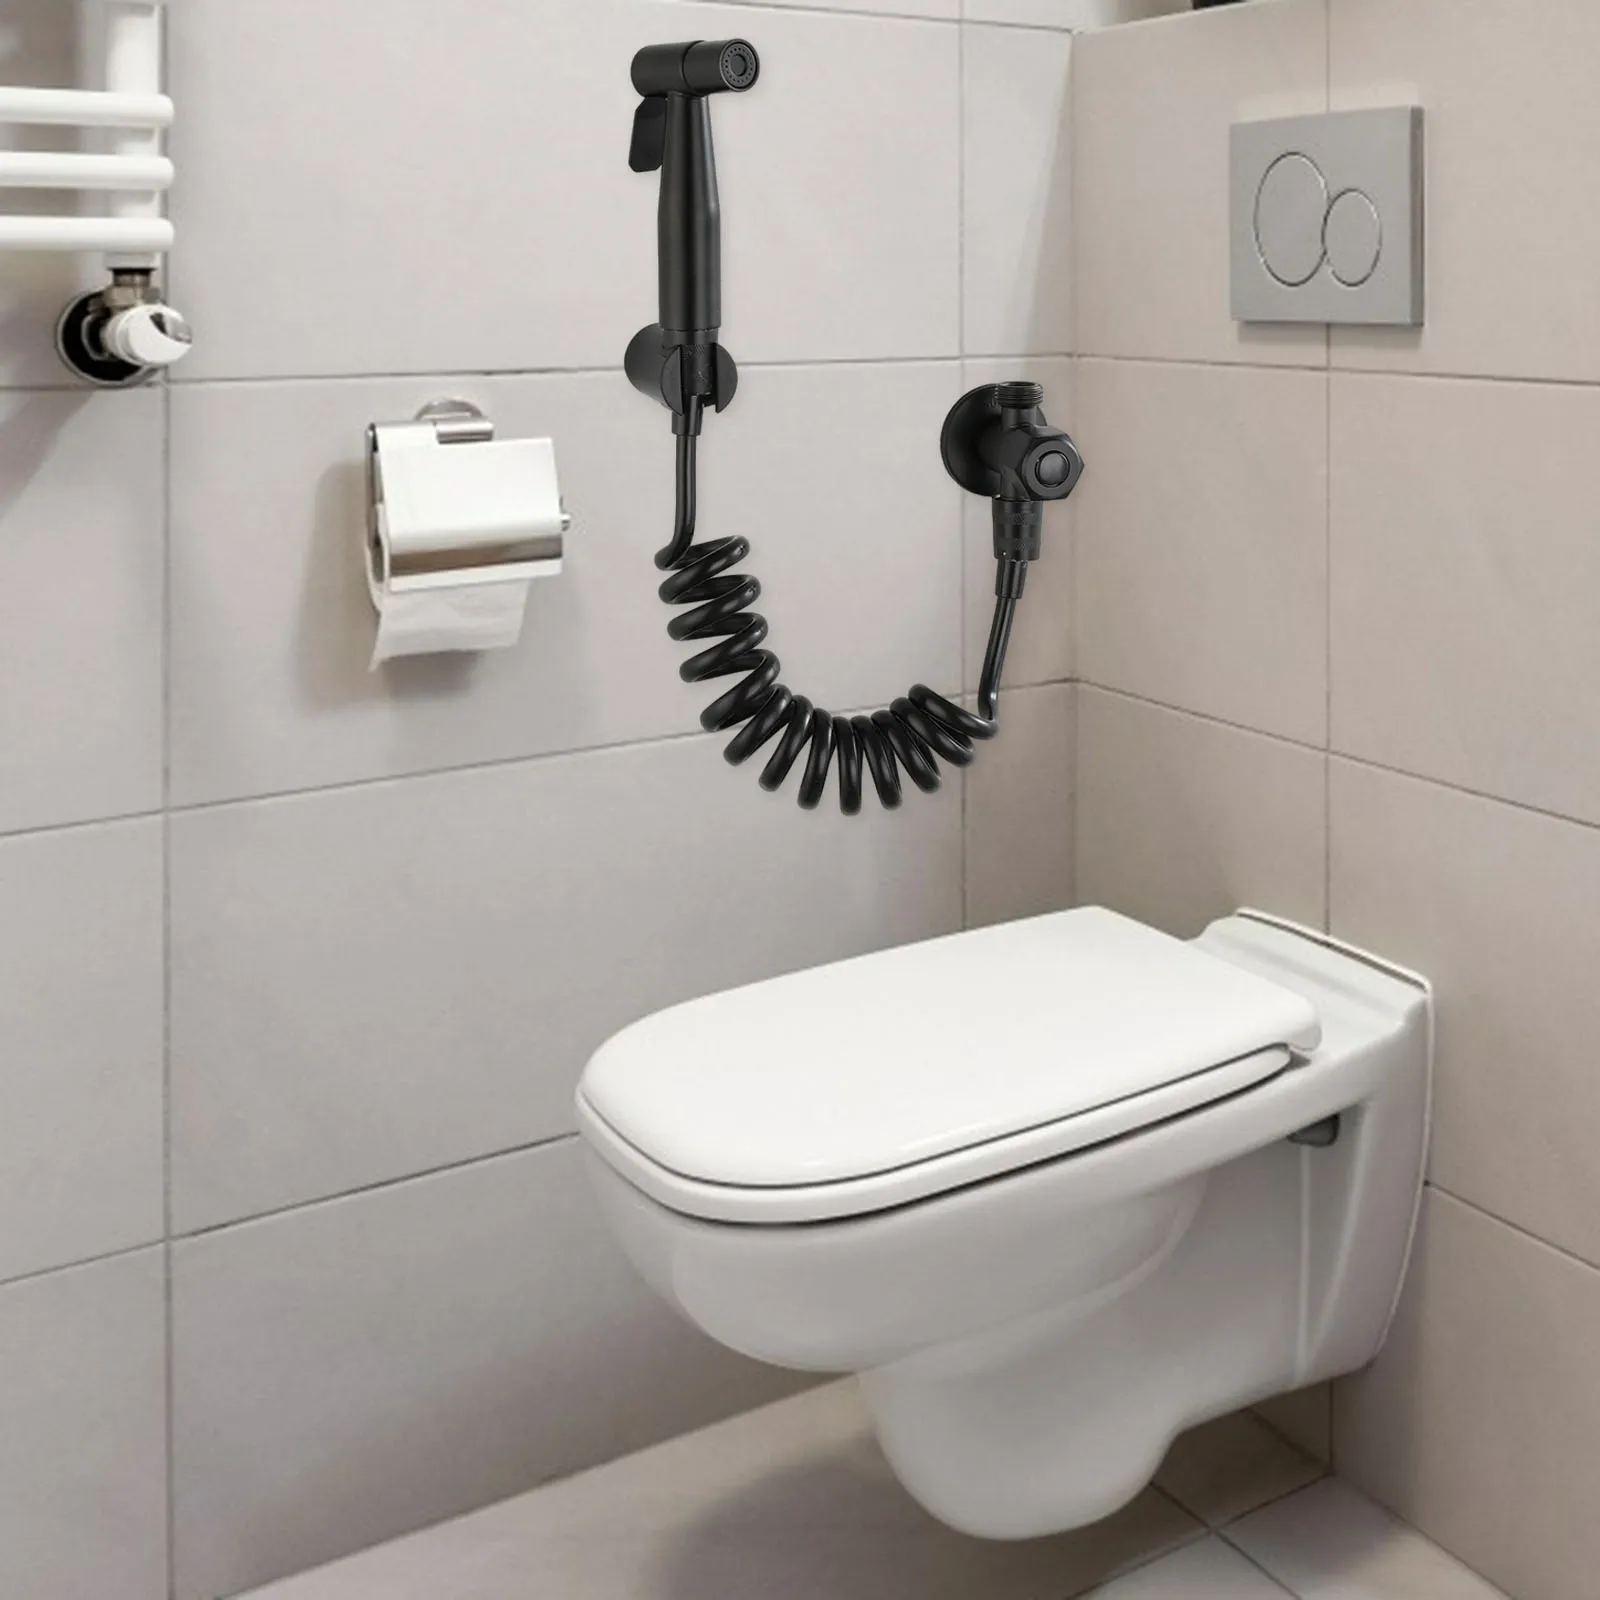 Handheld Bathroom Toilet Bidet Shower Spray Water Divider Sprayer Sprinkler Set 